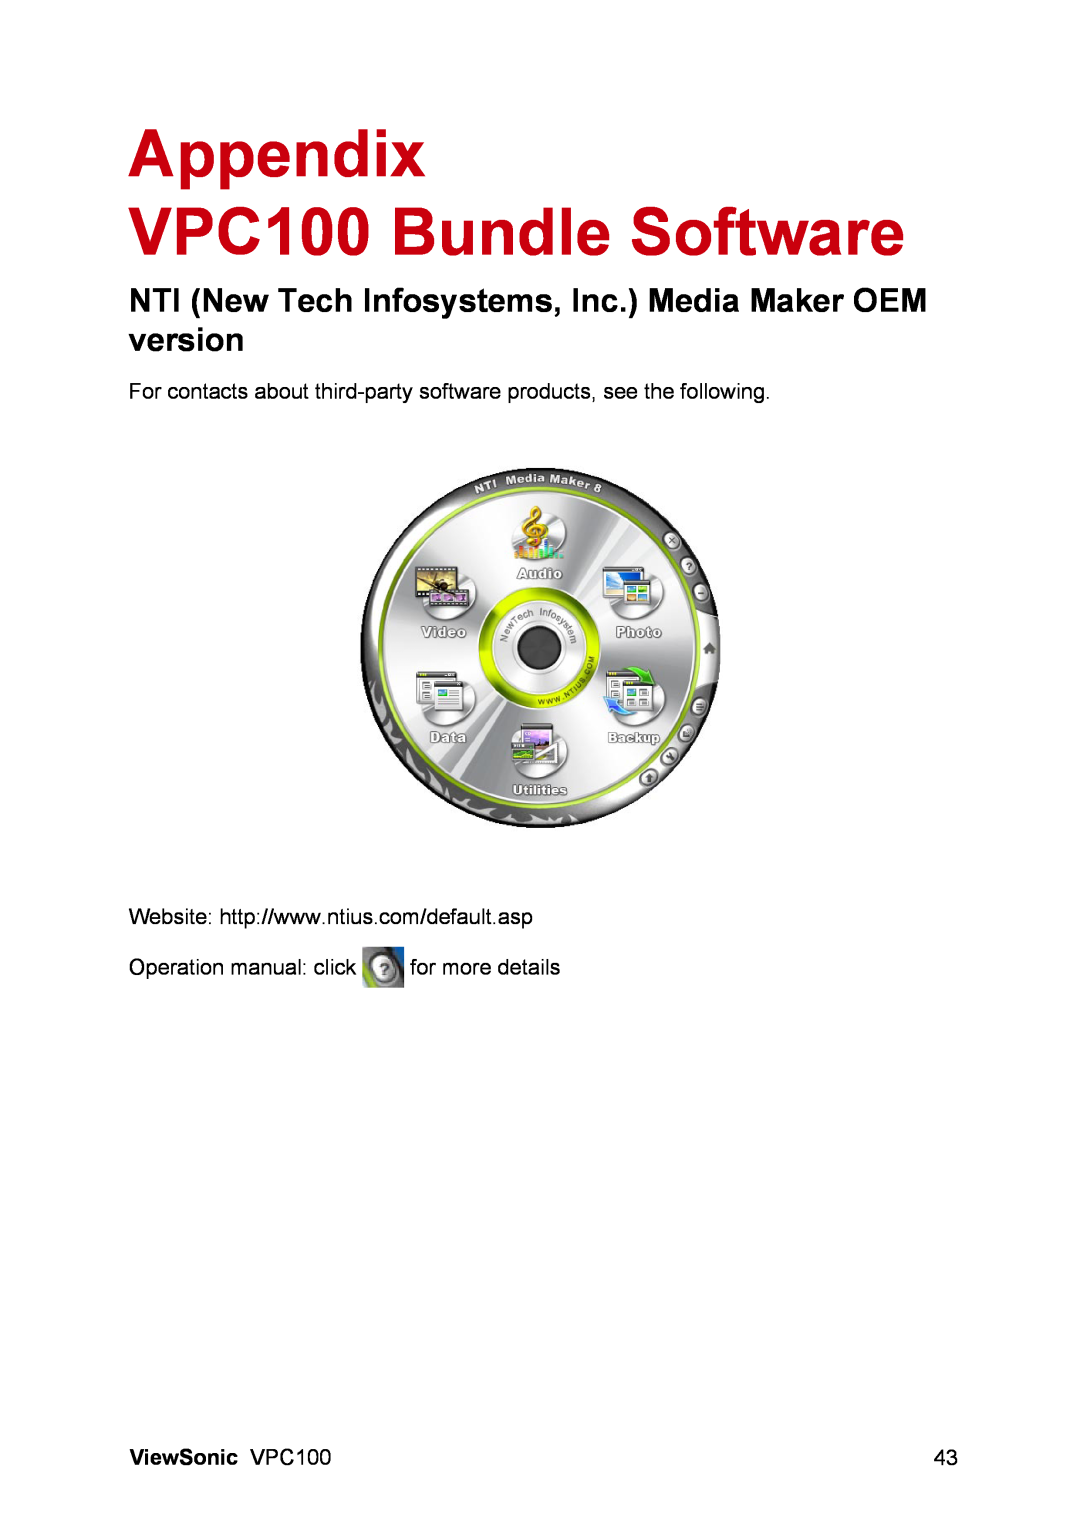 ViewSonic manual Appendix VPC100 Bundle Software, ViewSonic VPC100 